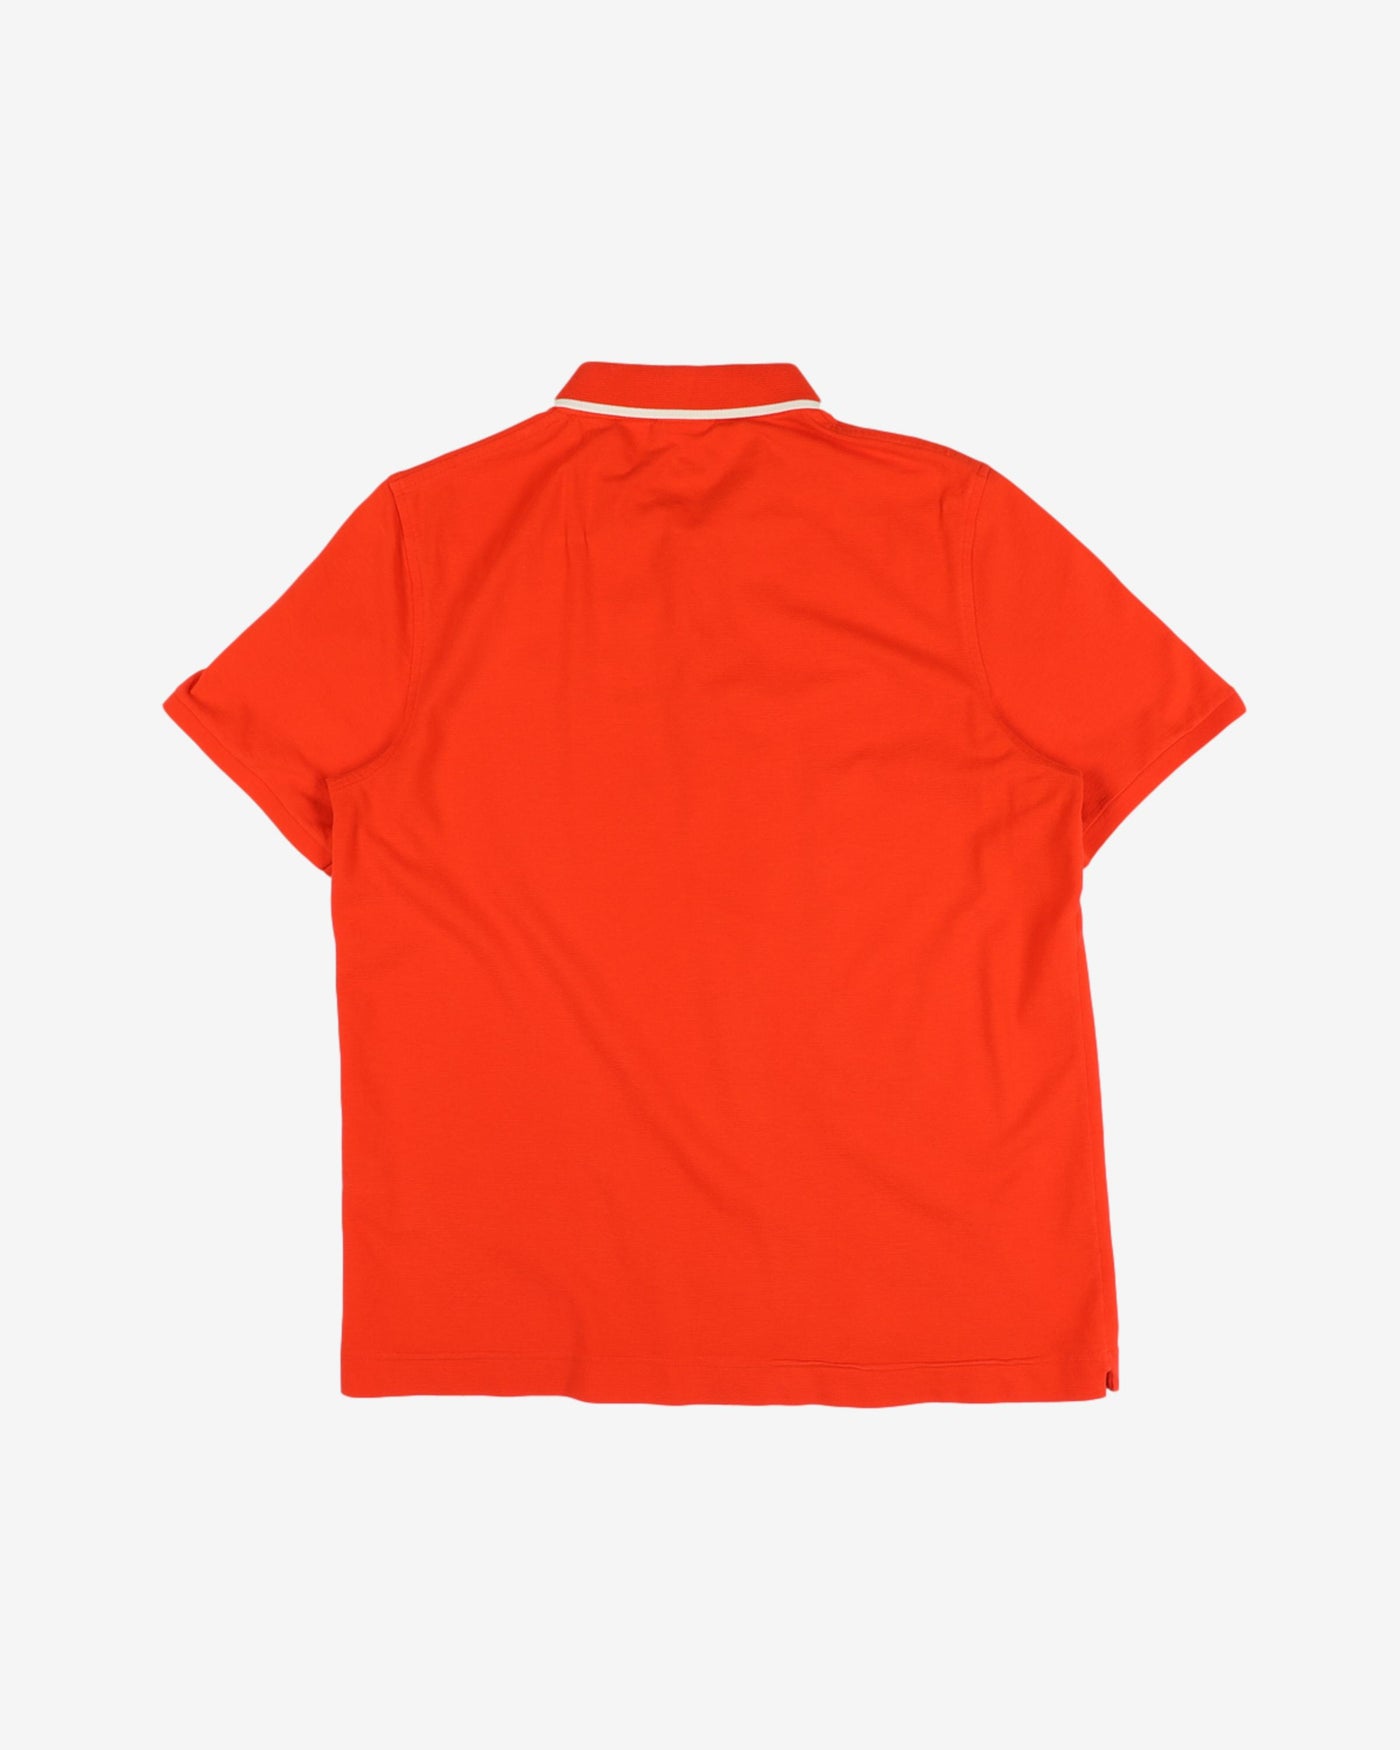 lacoste sport orange chest logo polo shirt - m